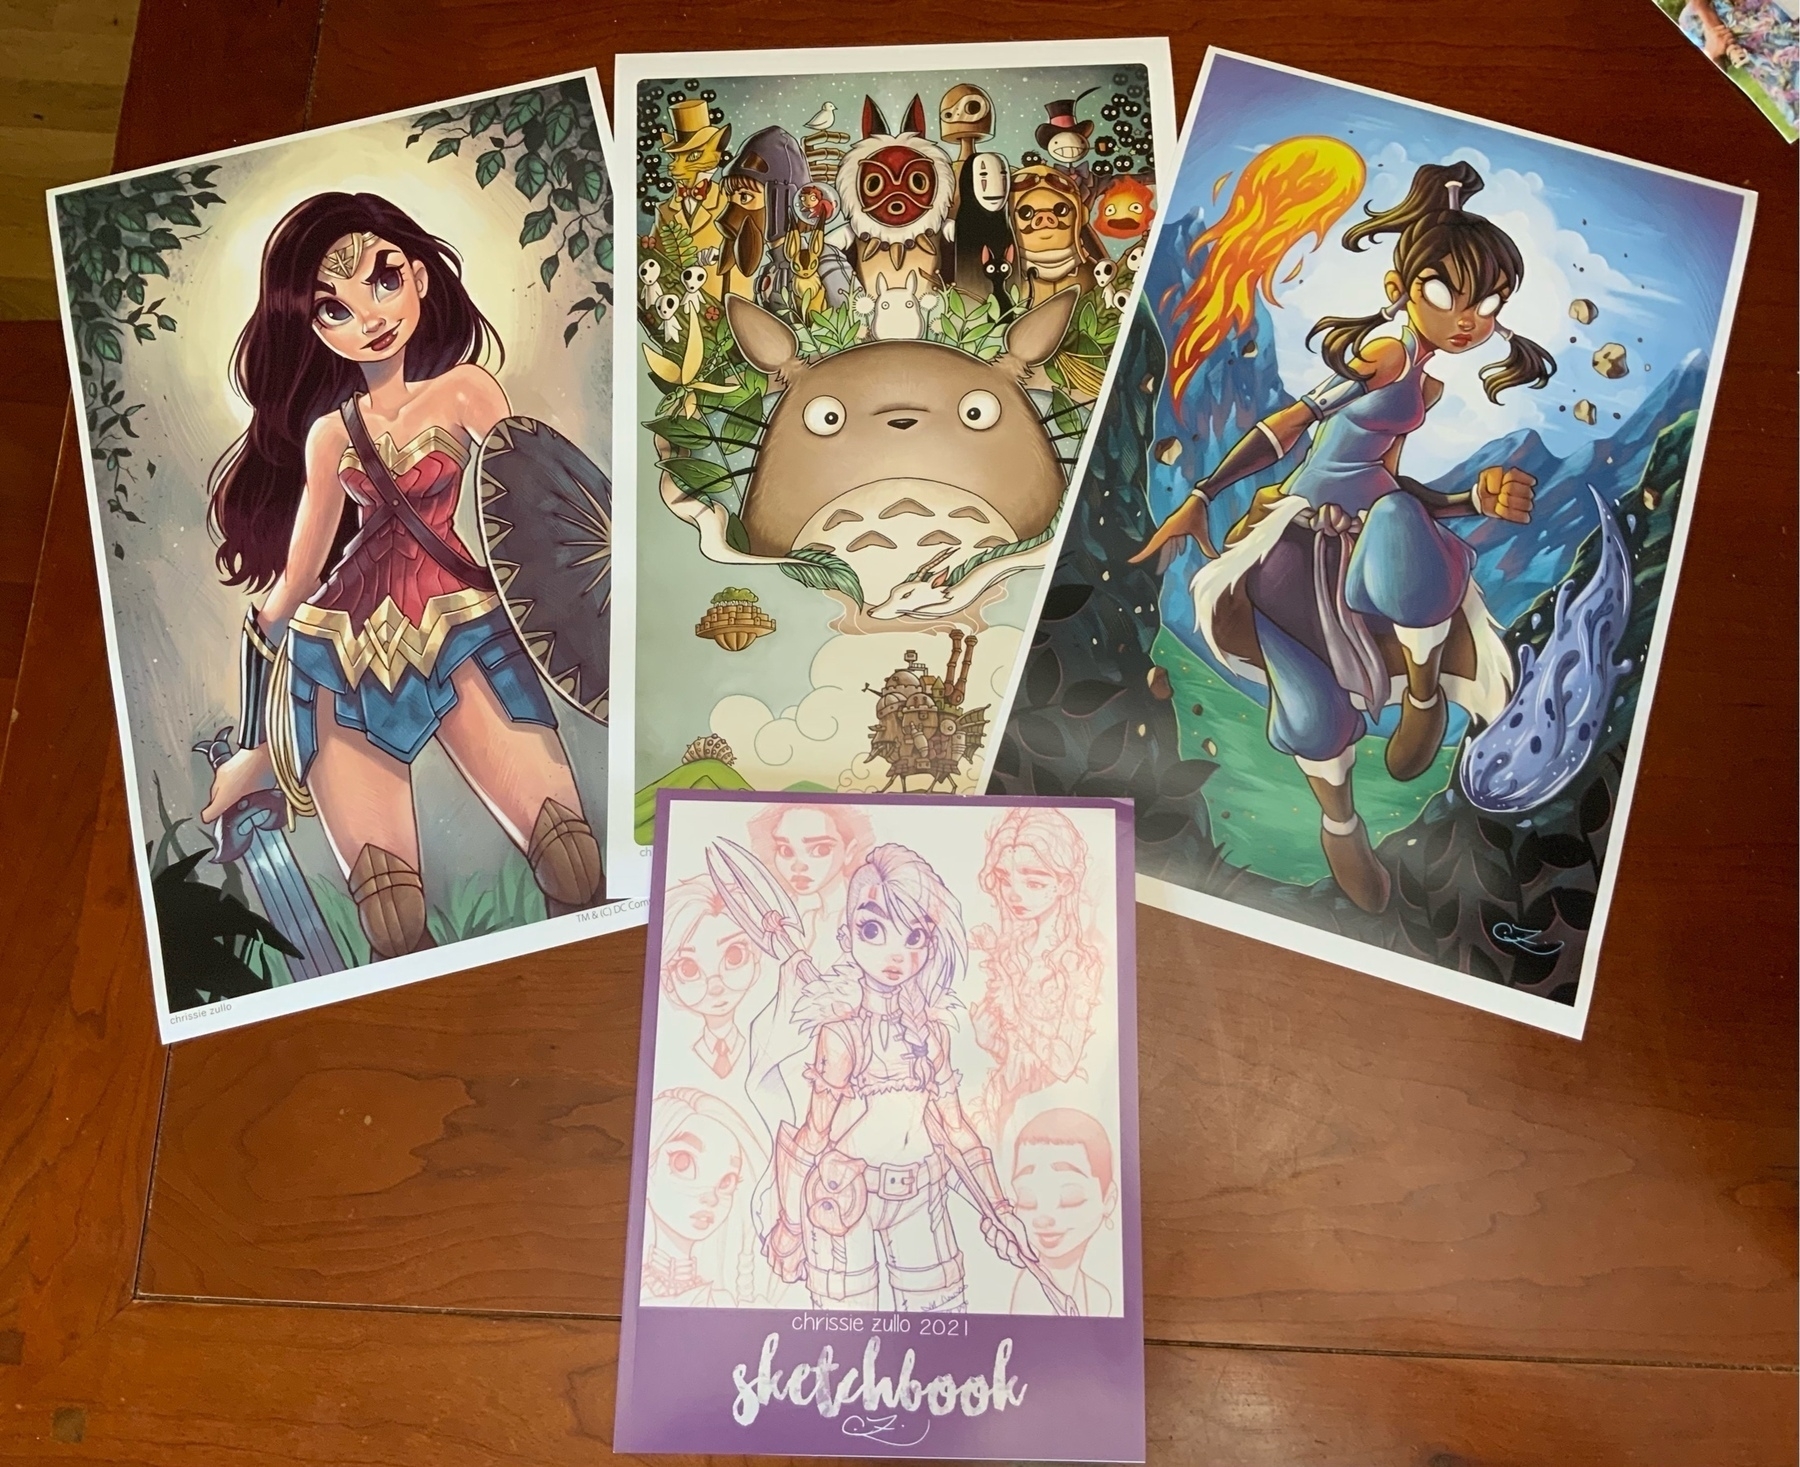 11"x17" prints: Wonder Woman, Tribute to Miyazaki, and Korra, plus 2021 Sketchbook.